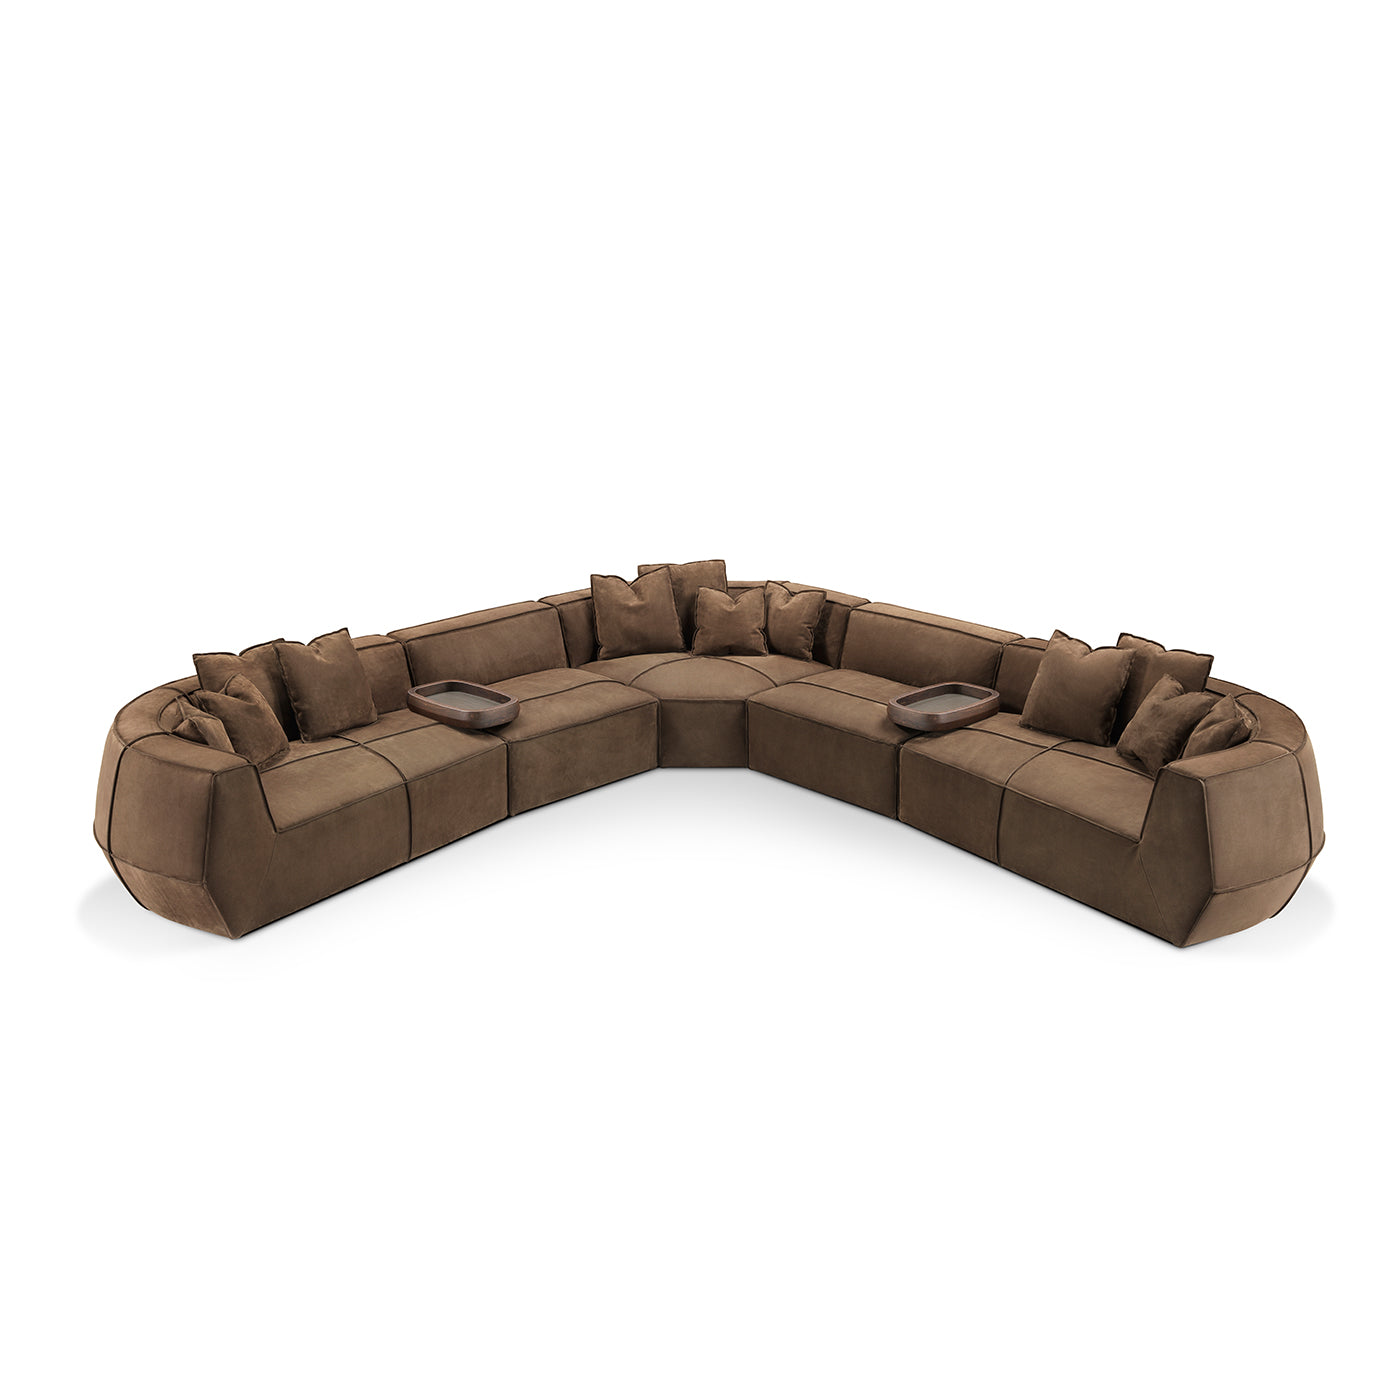 Infinito Brown Leather Sofa by Lorenza Bozzoli - Alternative view 2